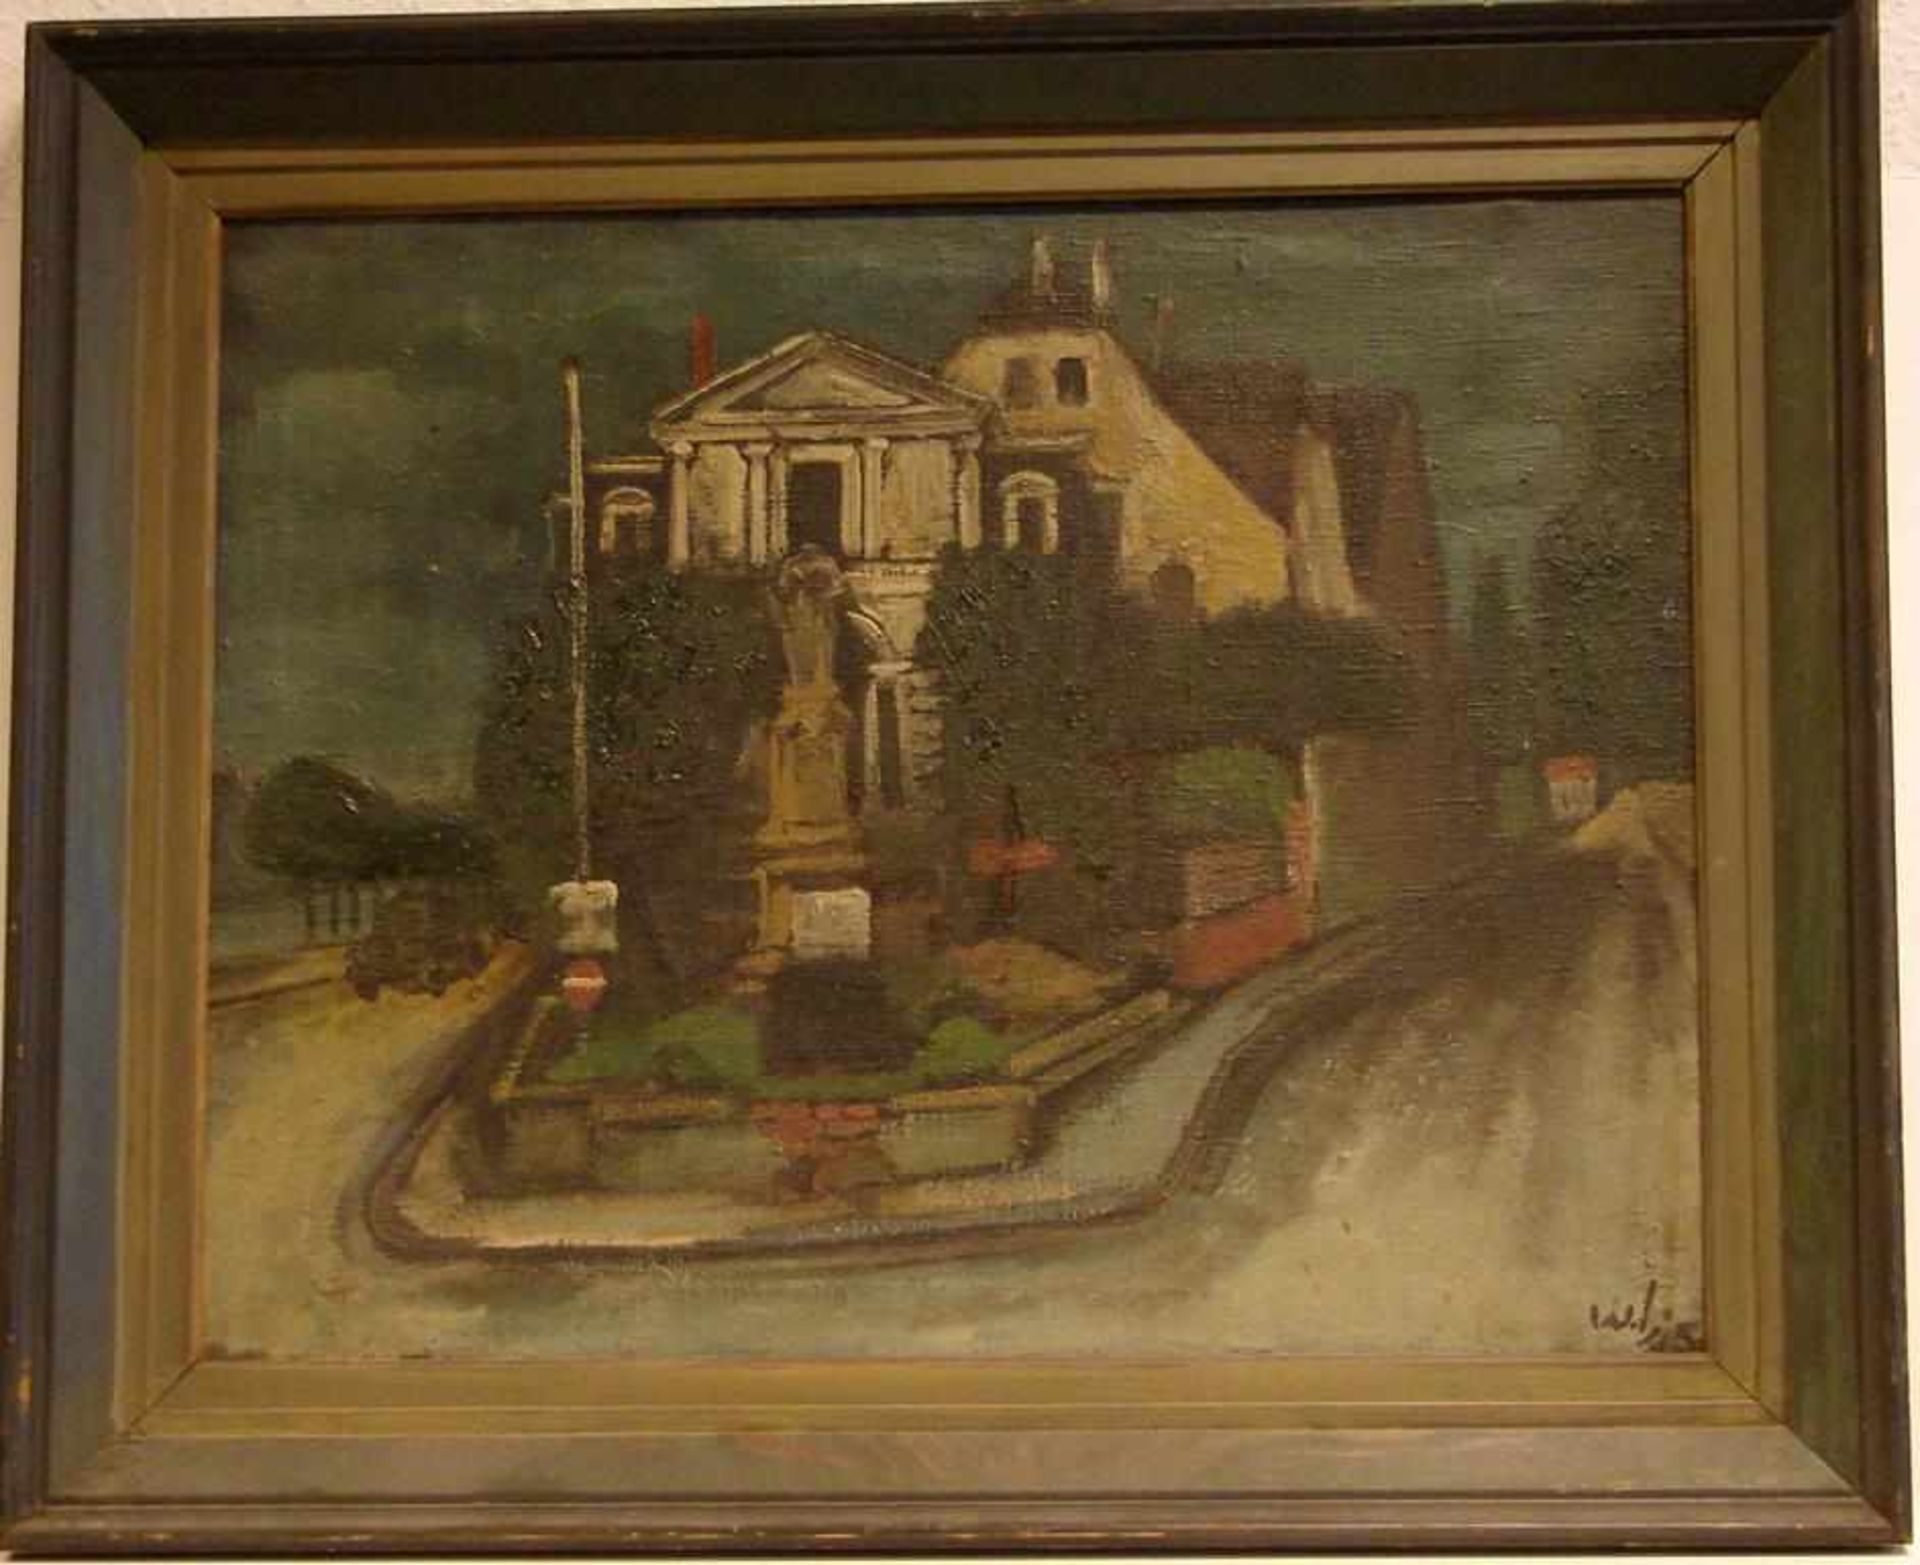 WALTER SIMSCH (1899-1975), "Haus in Königswinter", ÖL/L, u.re.sig., dat. 1945, ca. 69 x 56 cm